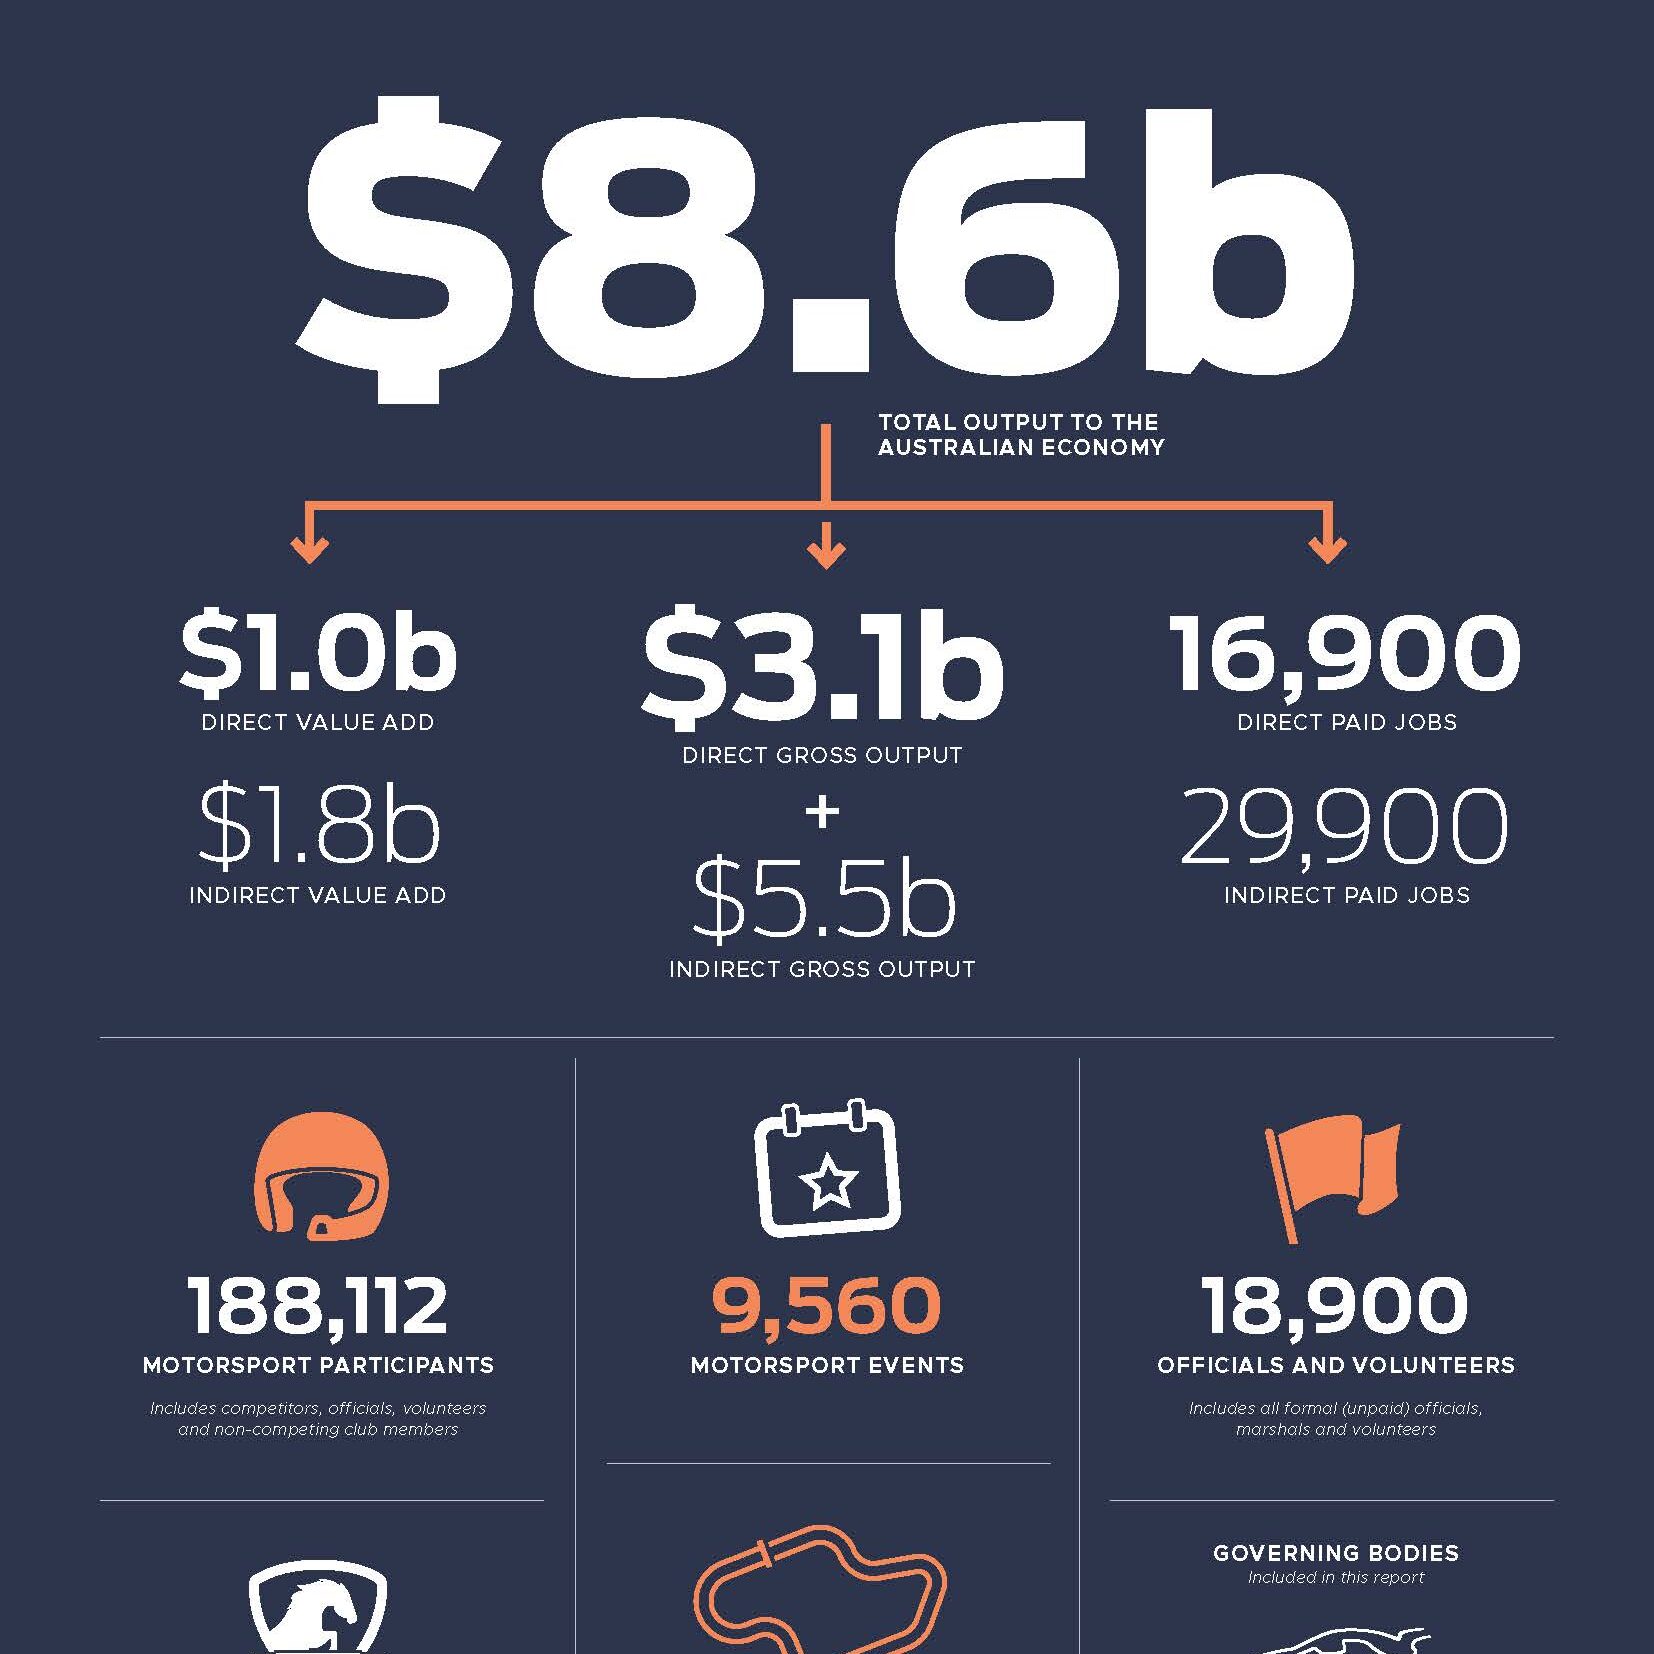 21motorsport-australia_motorsport-industry-economic-contribution_infographic_page_1